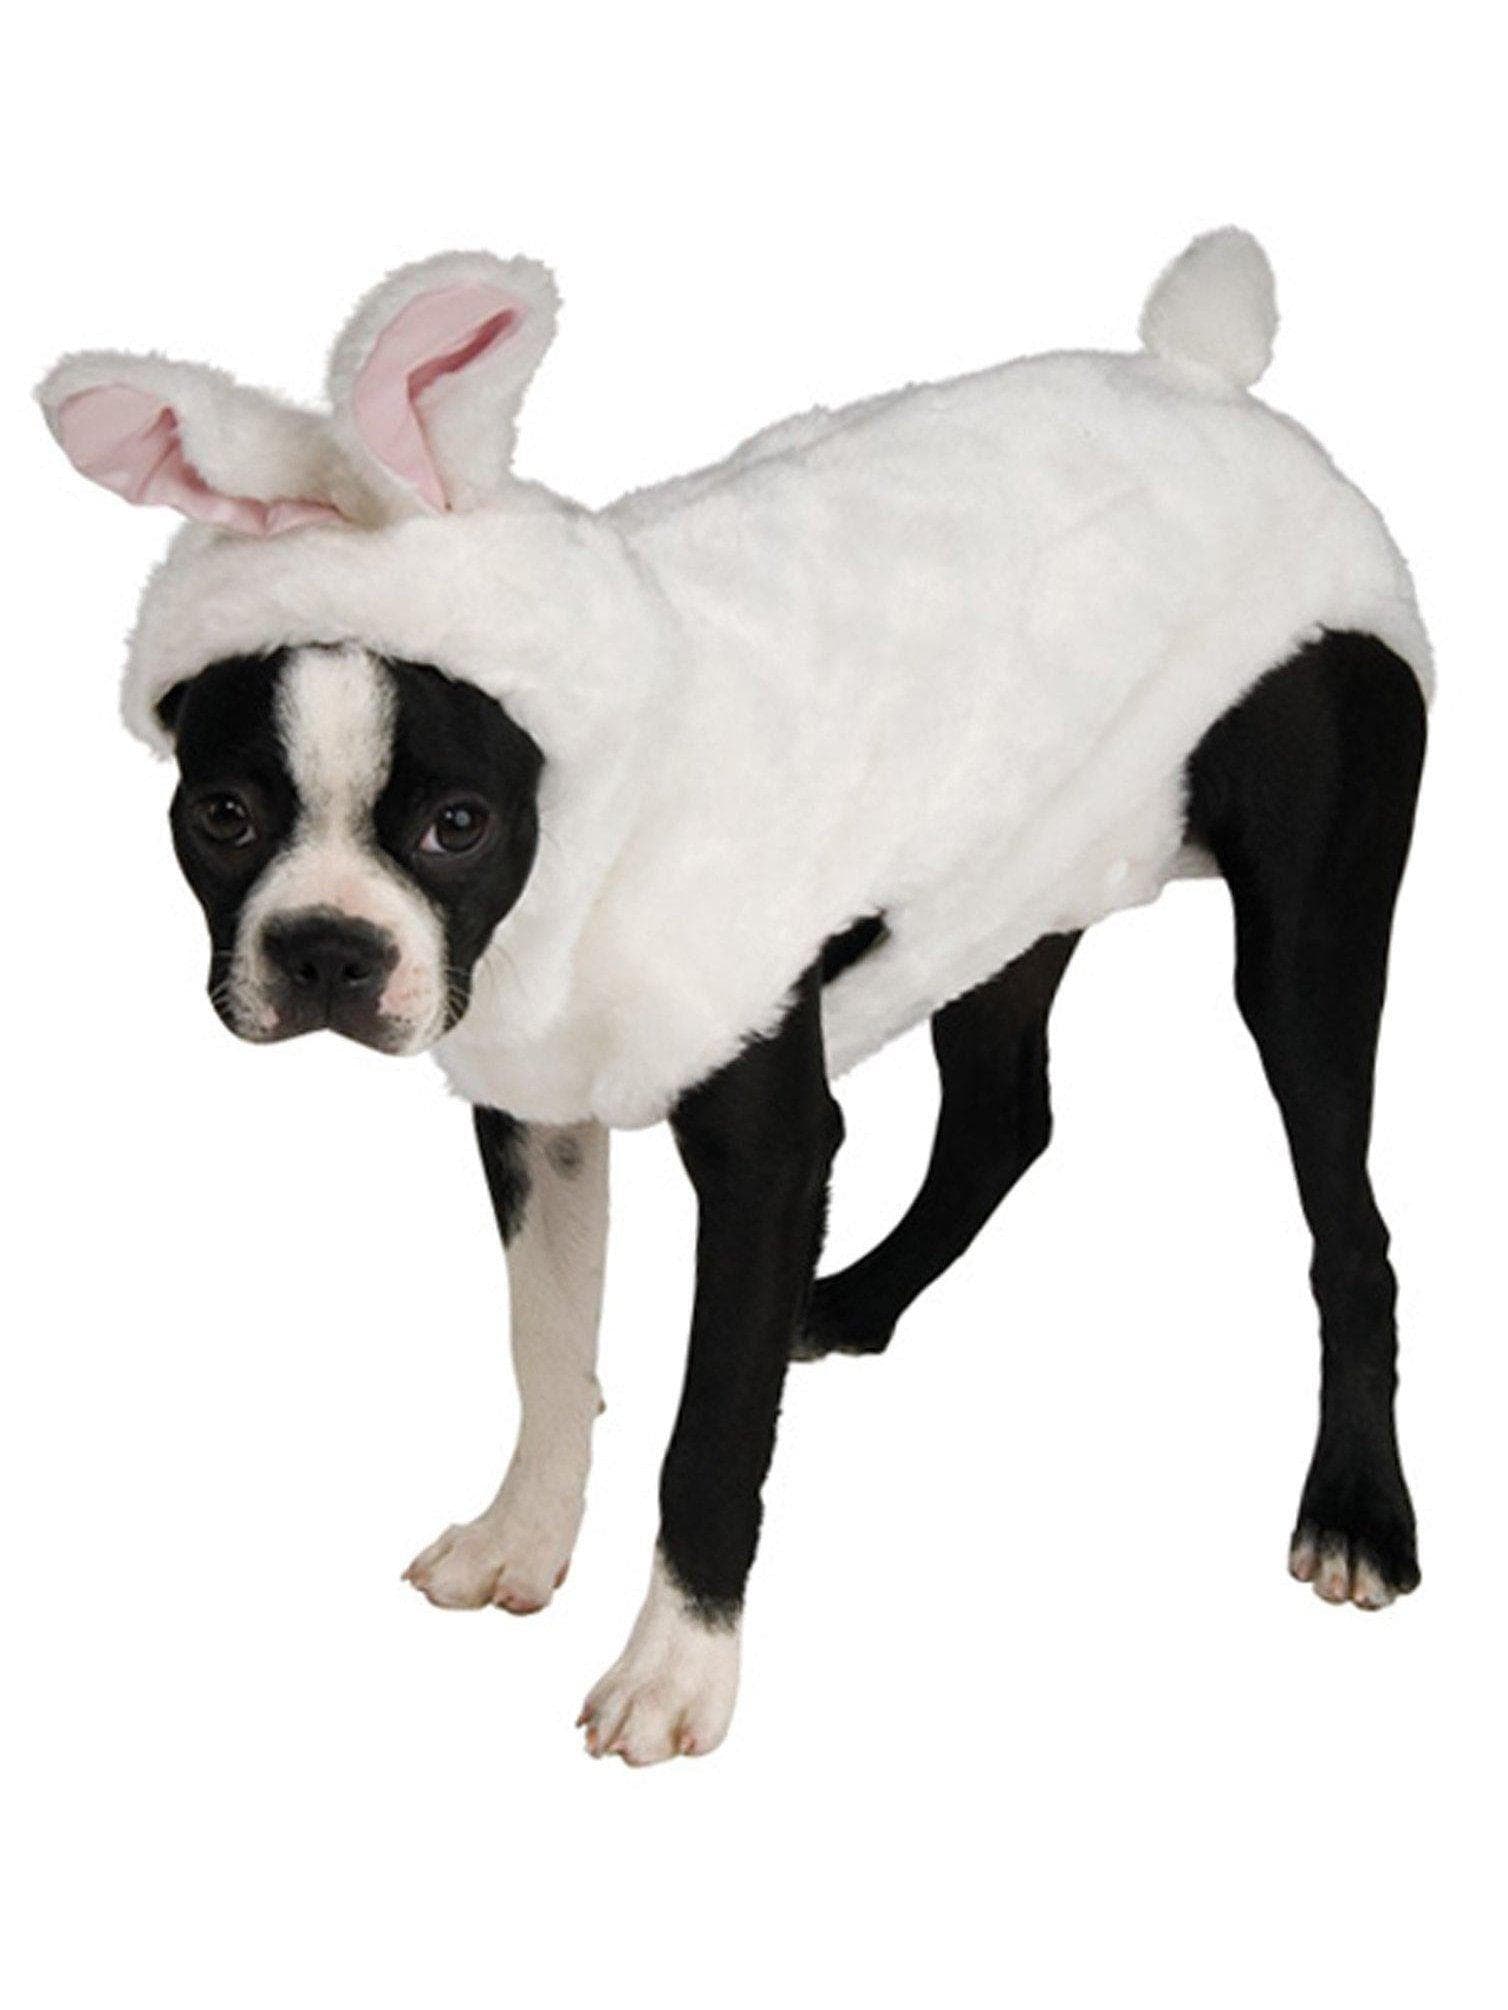 White Fluffy Bunny Pet Costume - costumes.com